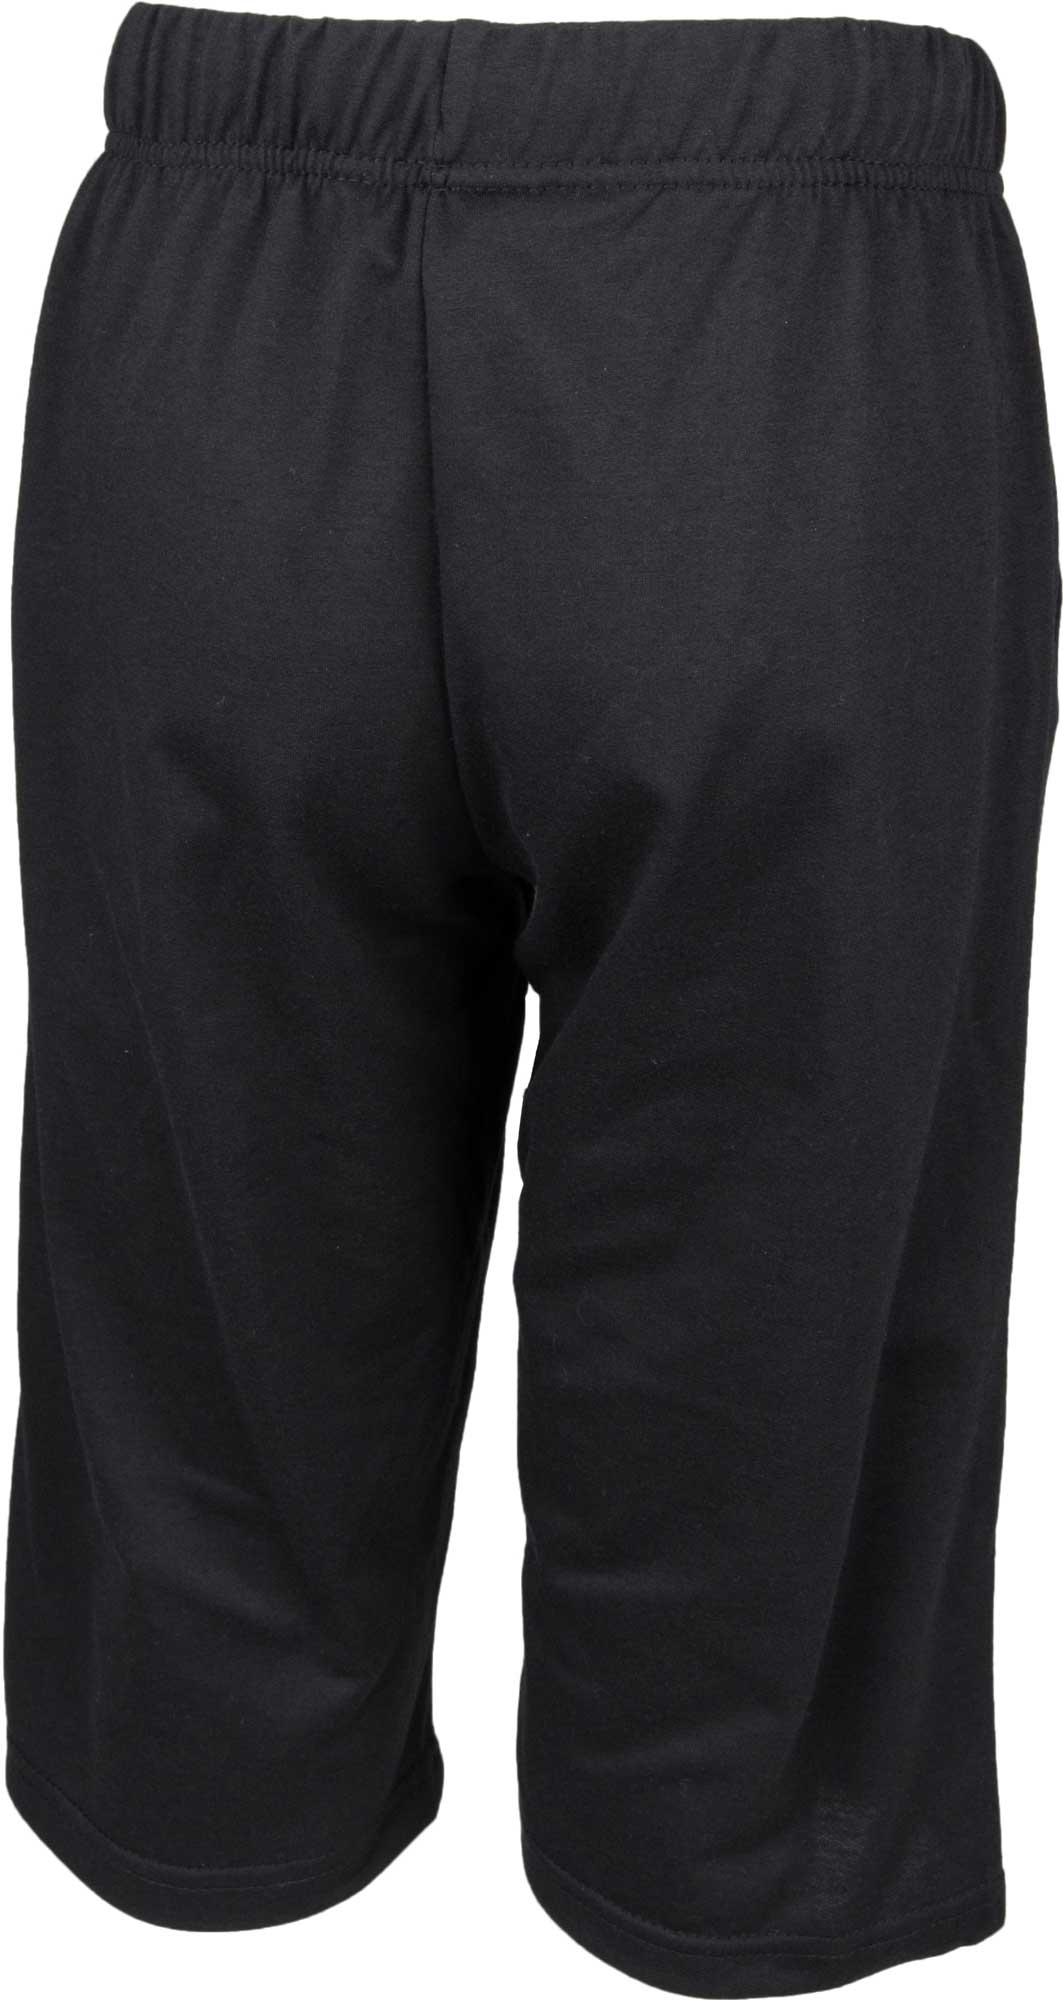 Boys’ three-quarter length pants